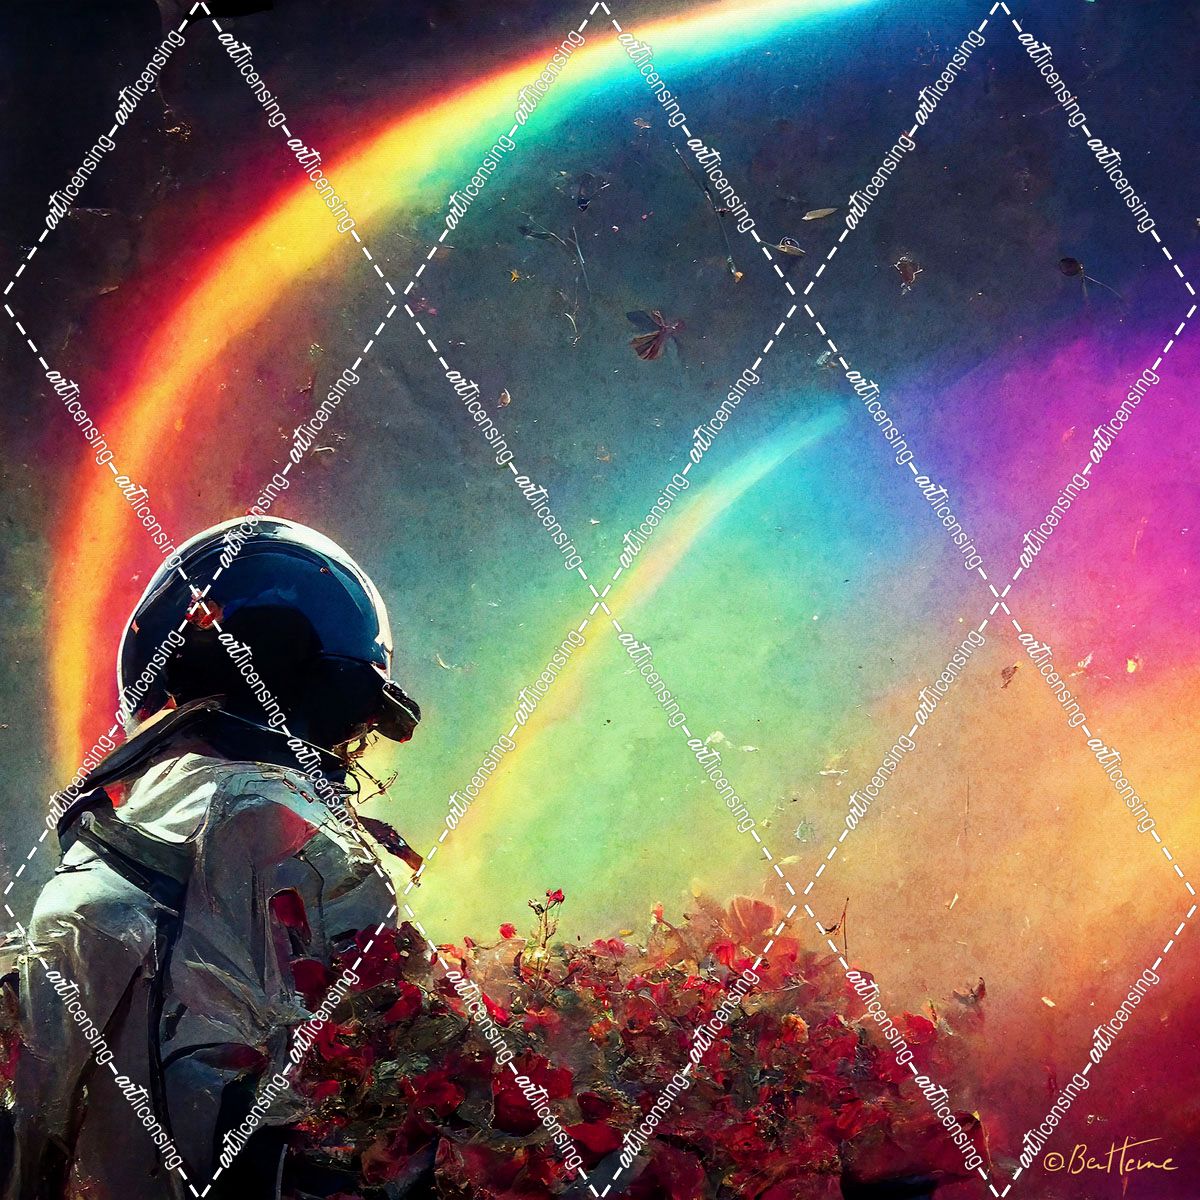 Astro Cruise 1 – Live in a Rainbow Galaxy